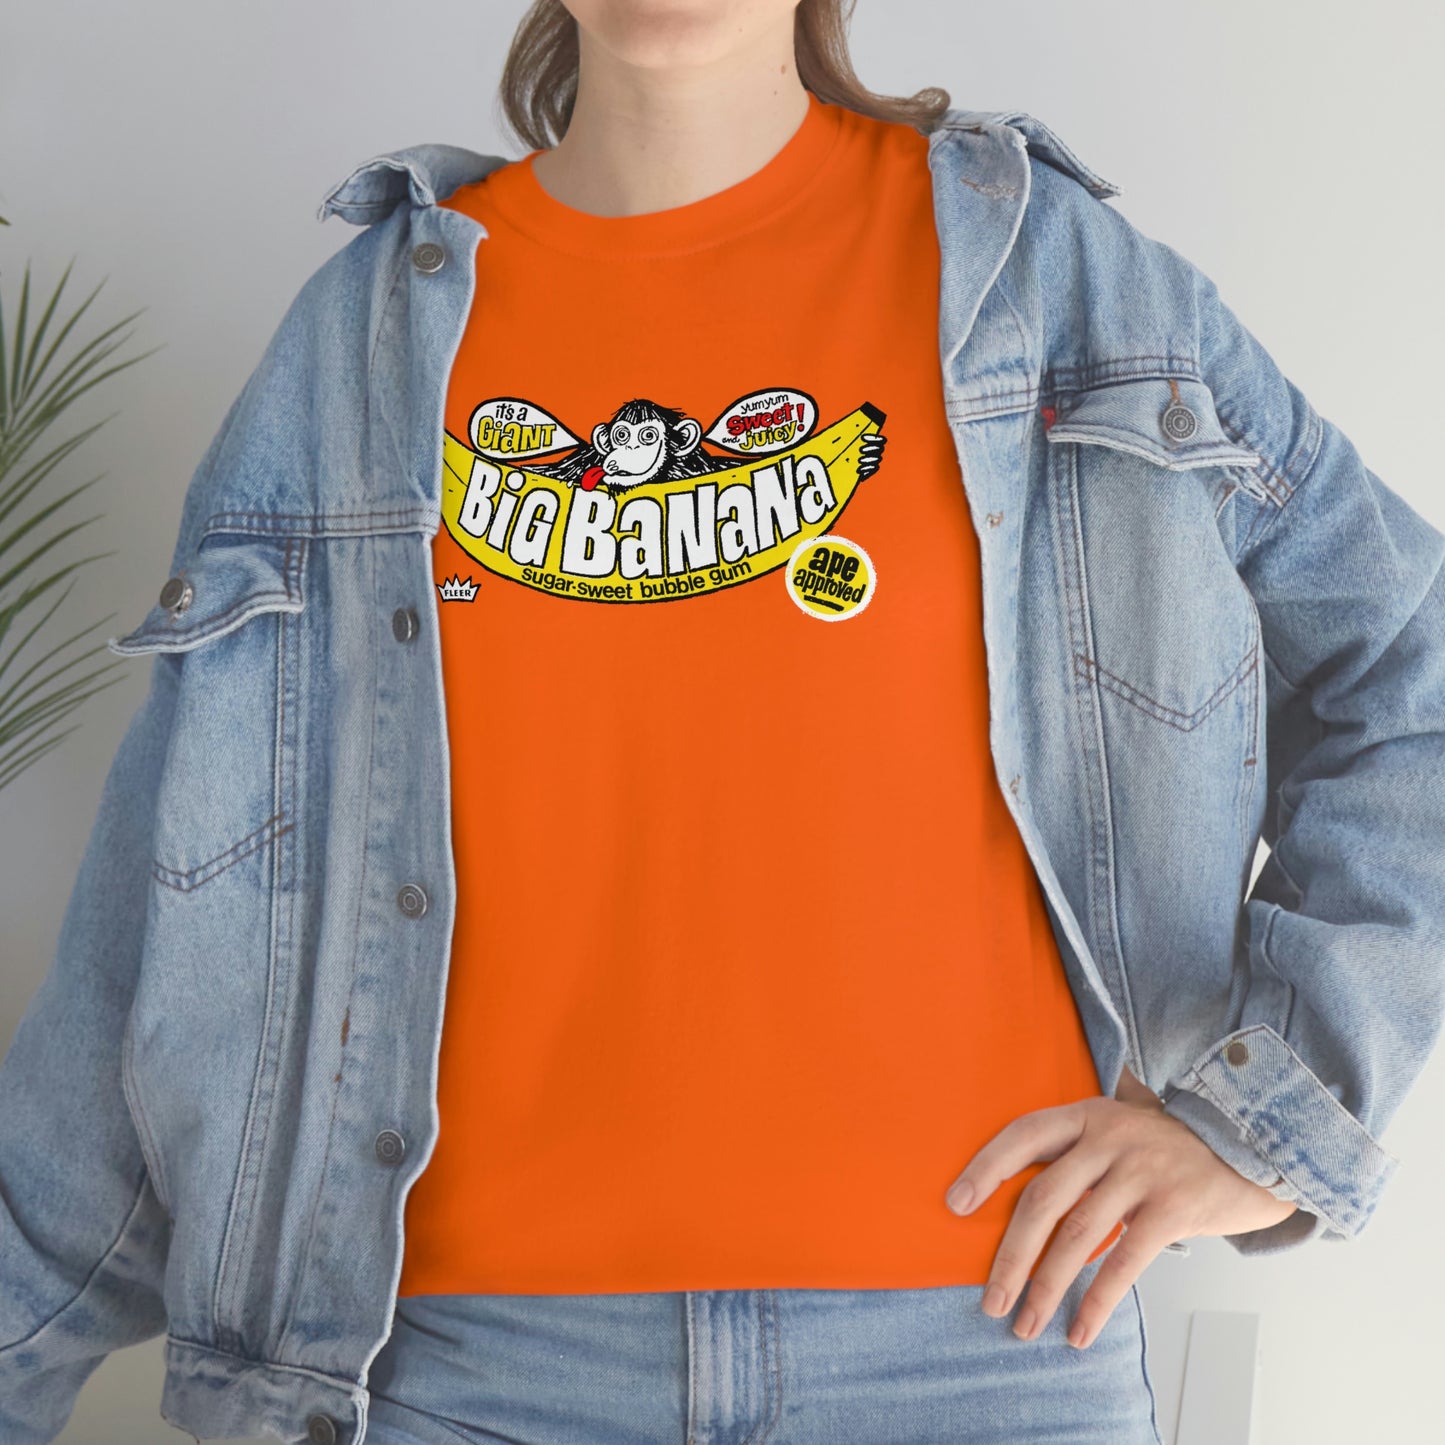 Big Banana Gum T-Shirt